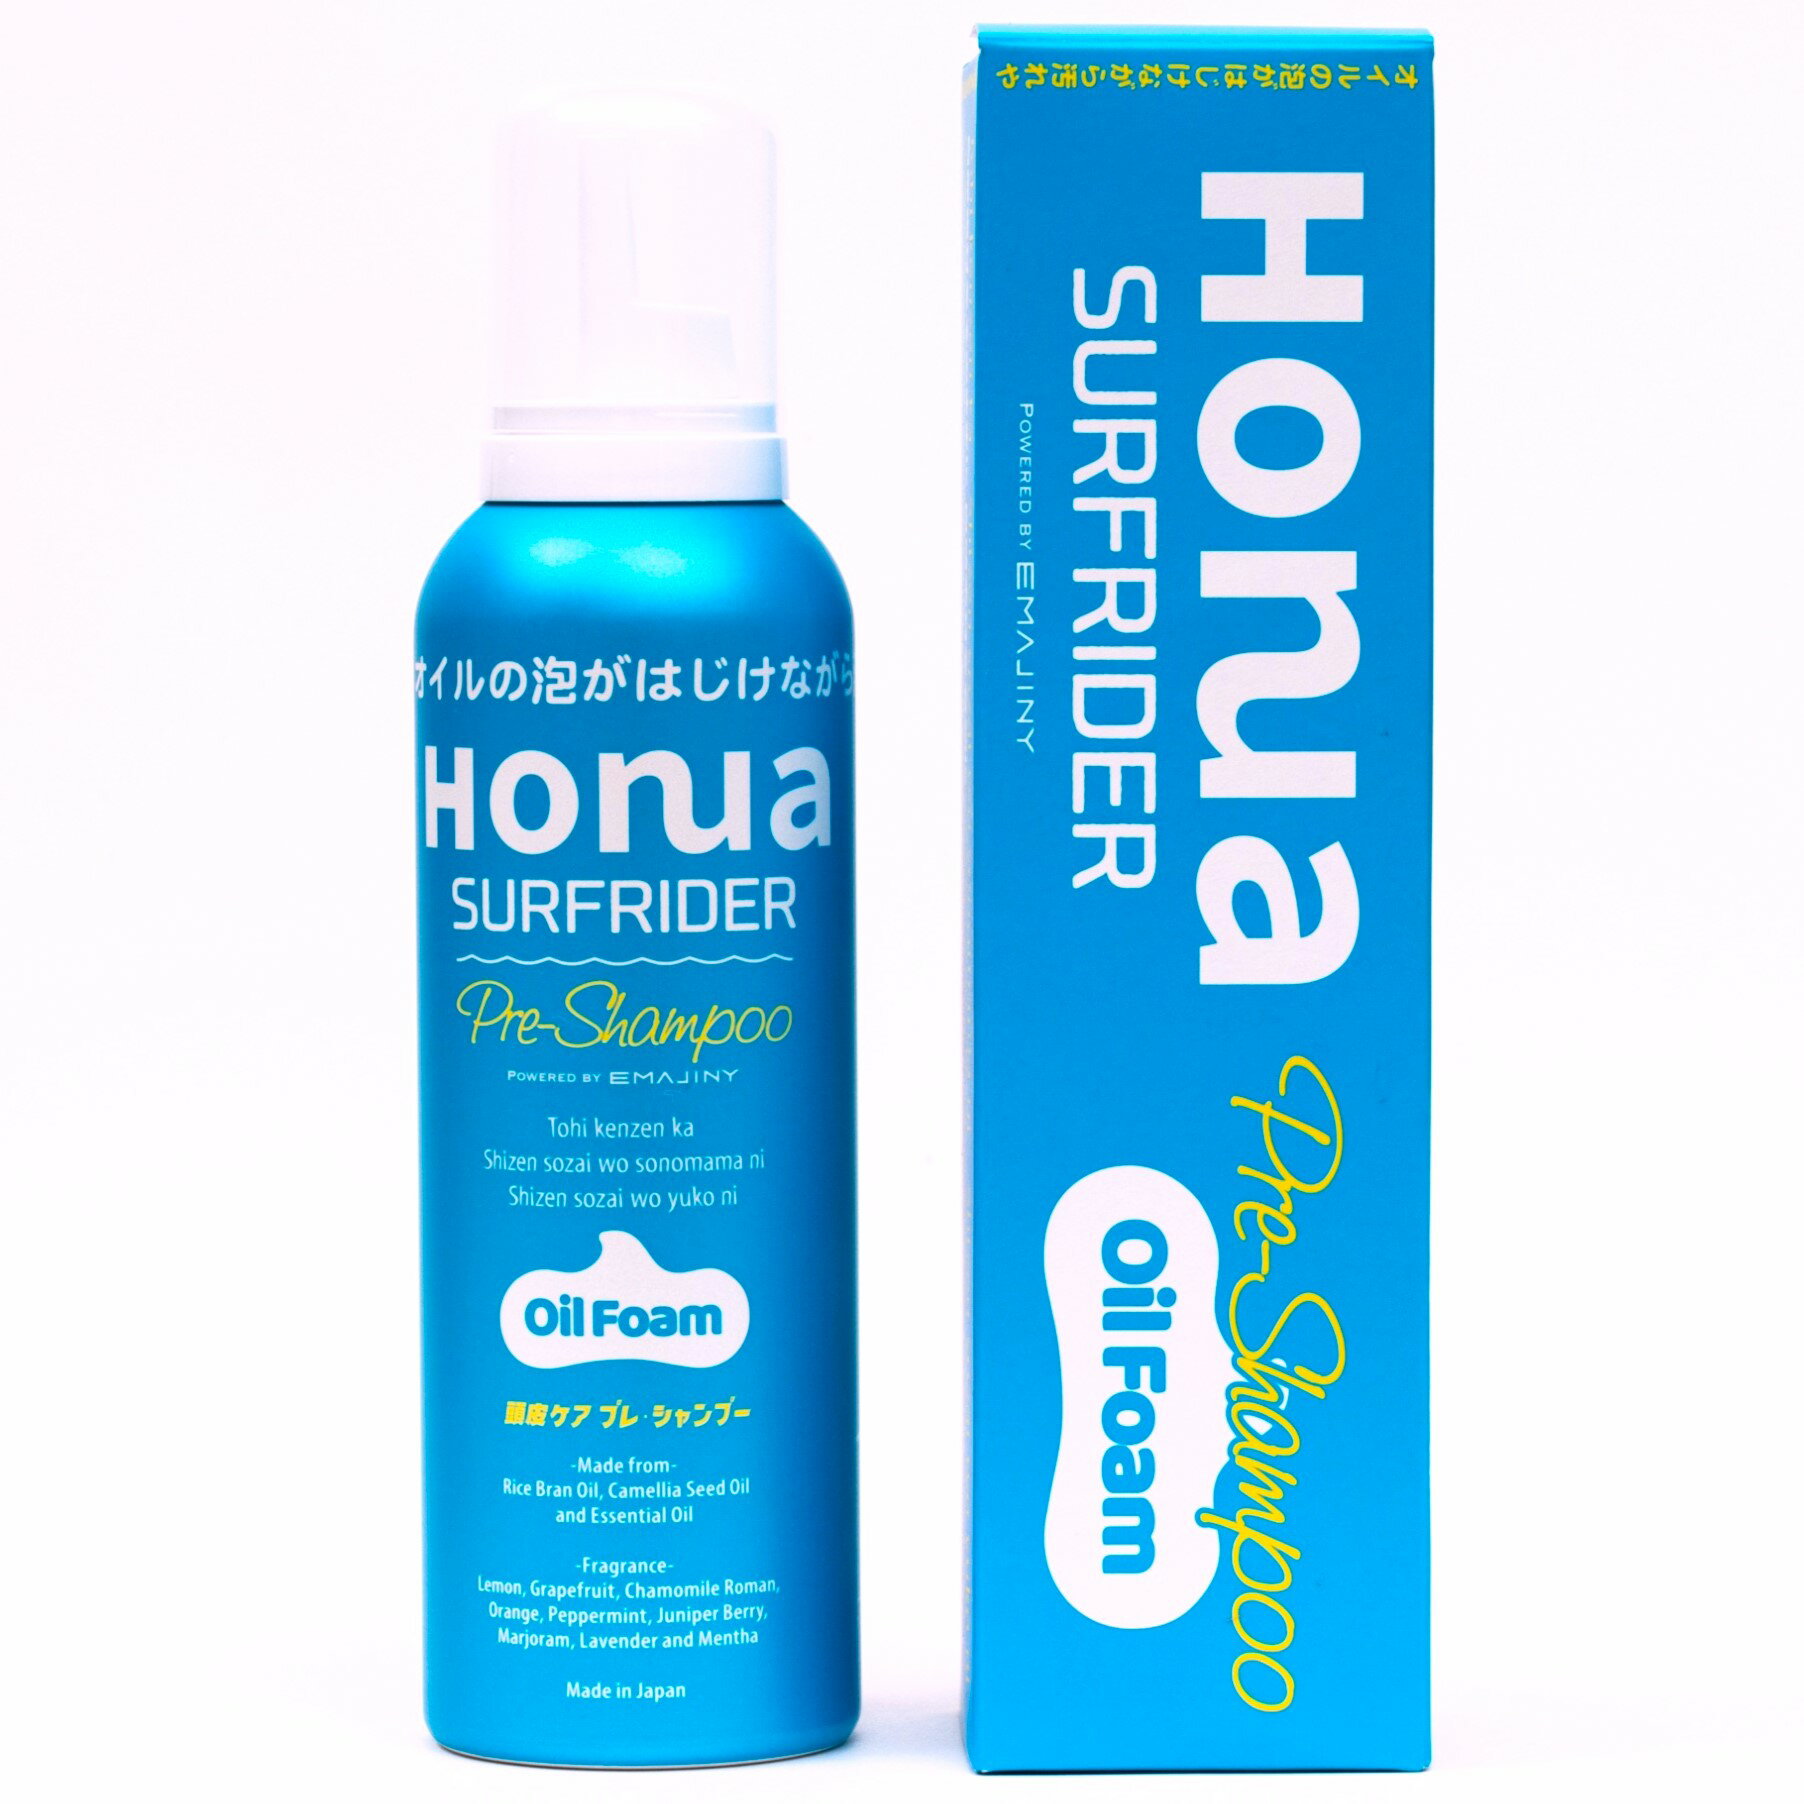 HONUA surfrider 頭皮ケア プレシャンプー オイルの泡がはじけながら汚れや皮脂を浮き上がらせて洗浄し、頭皮の健全化を助けます。 週..